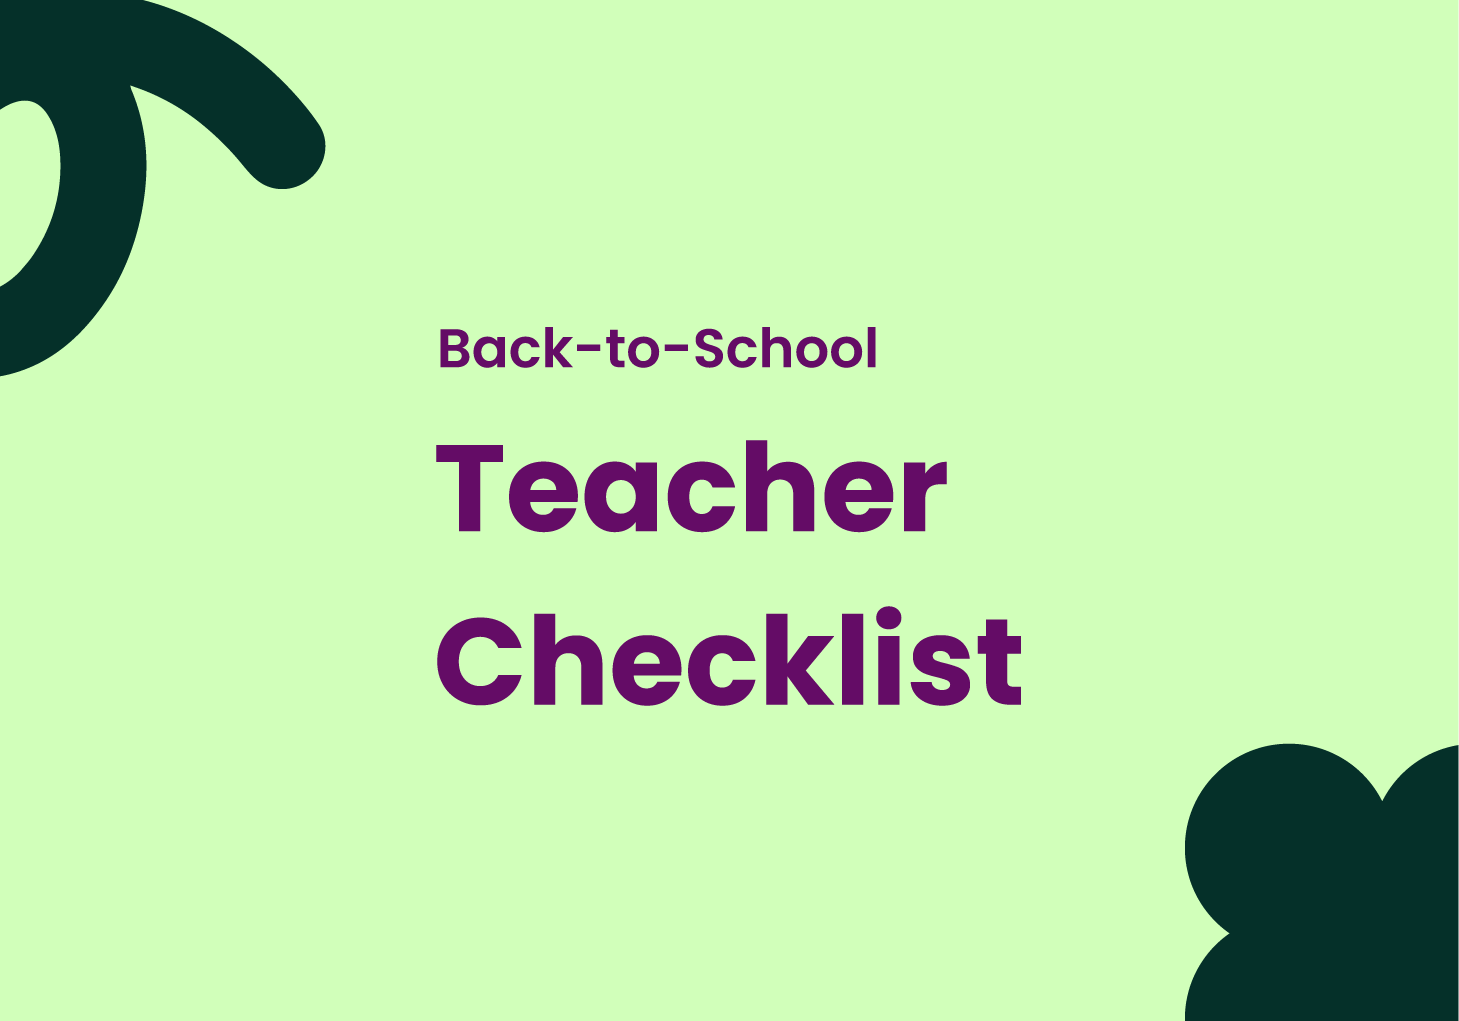 Back-to-School Teacher Chechlist